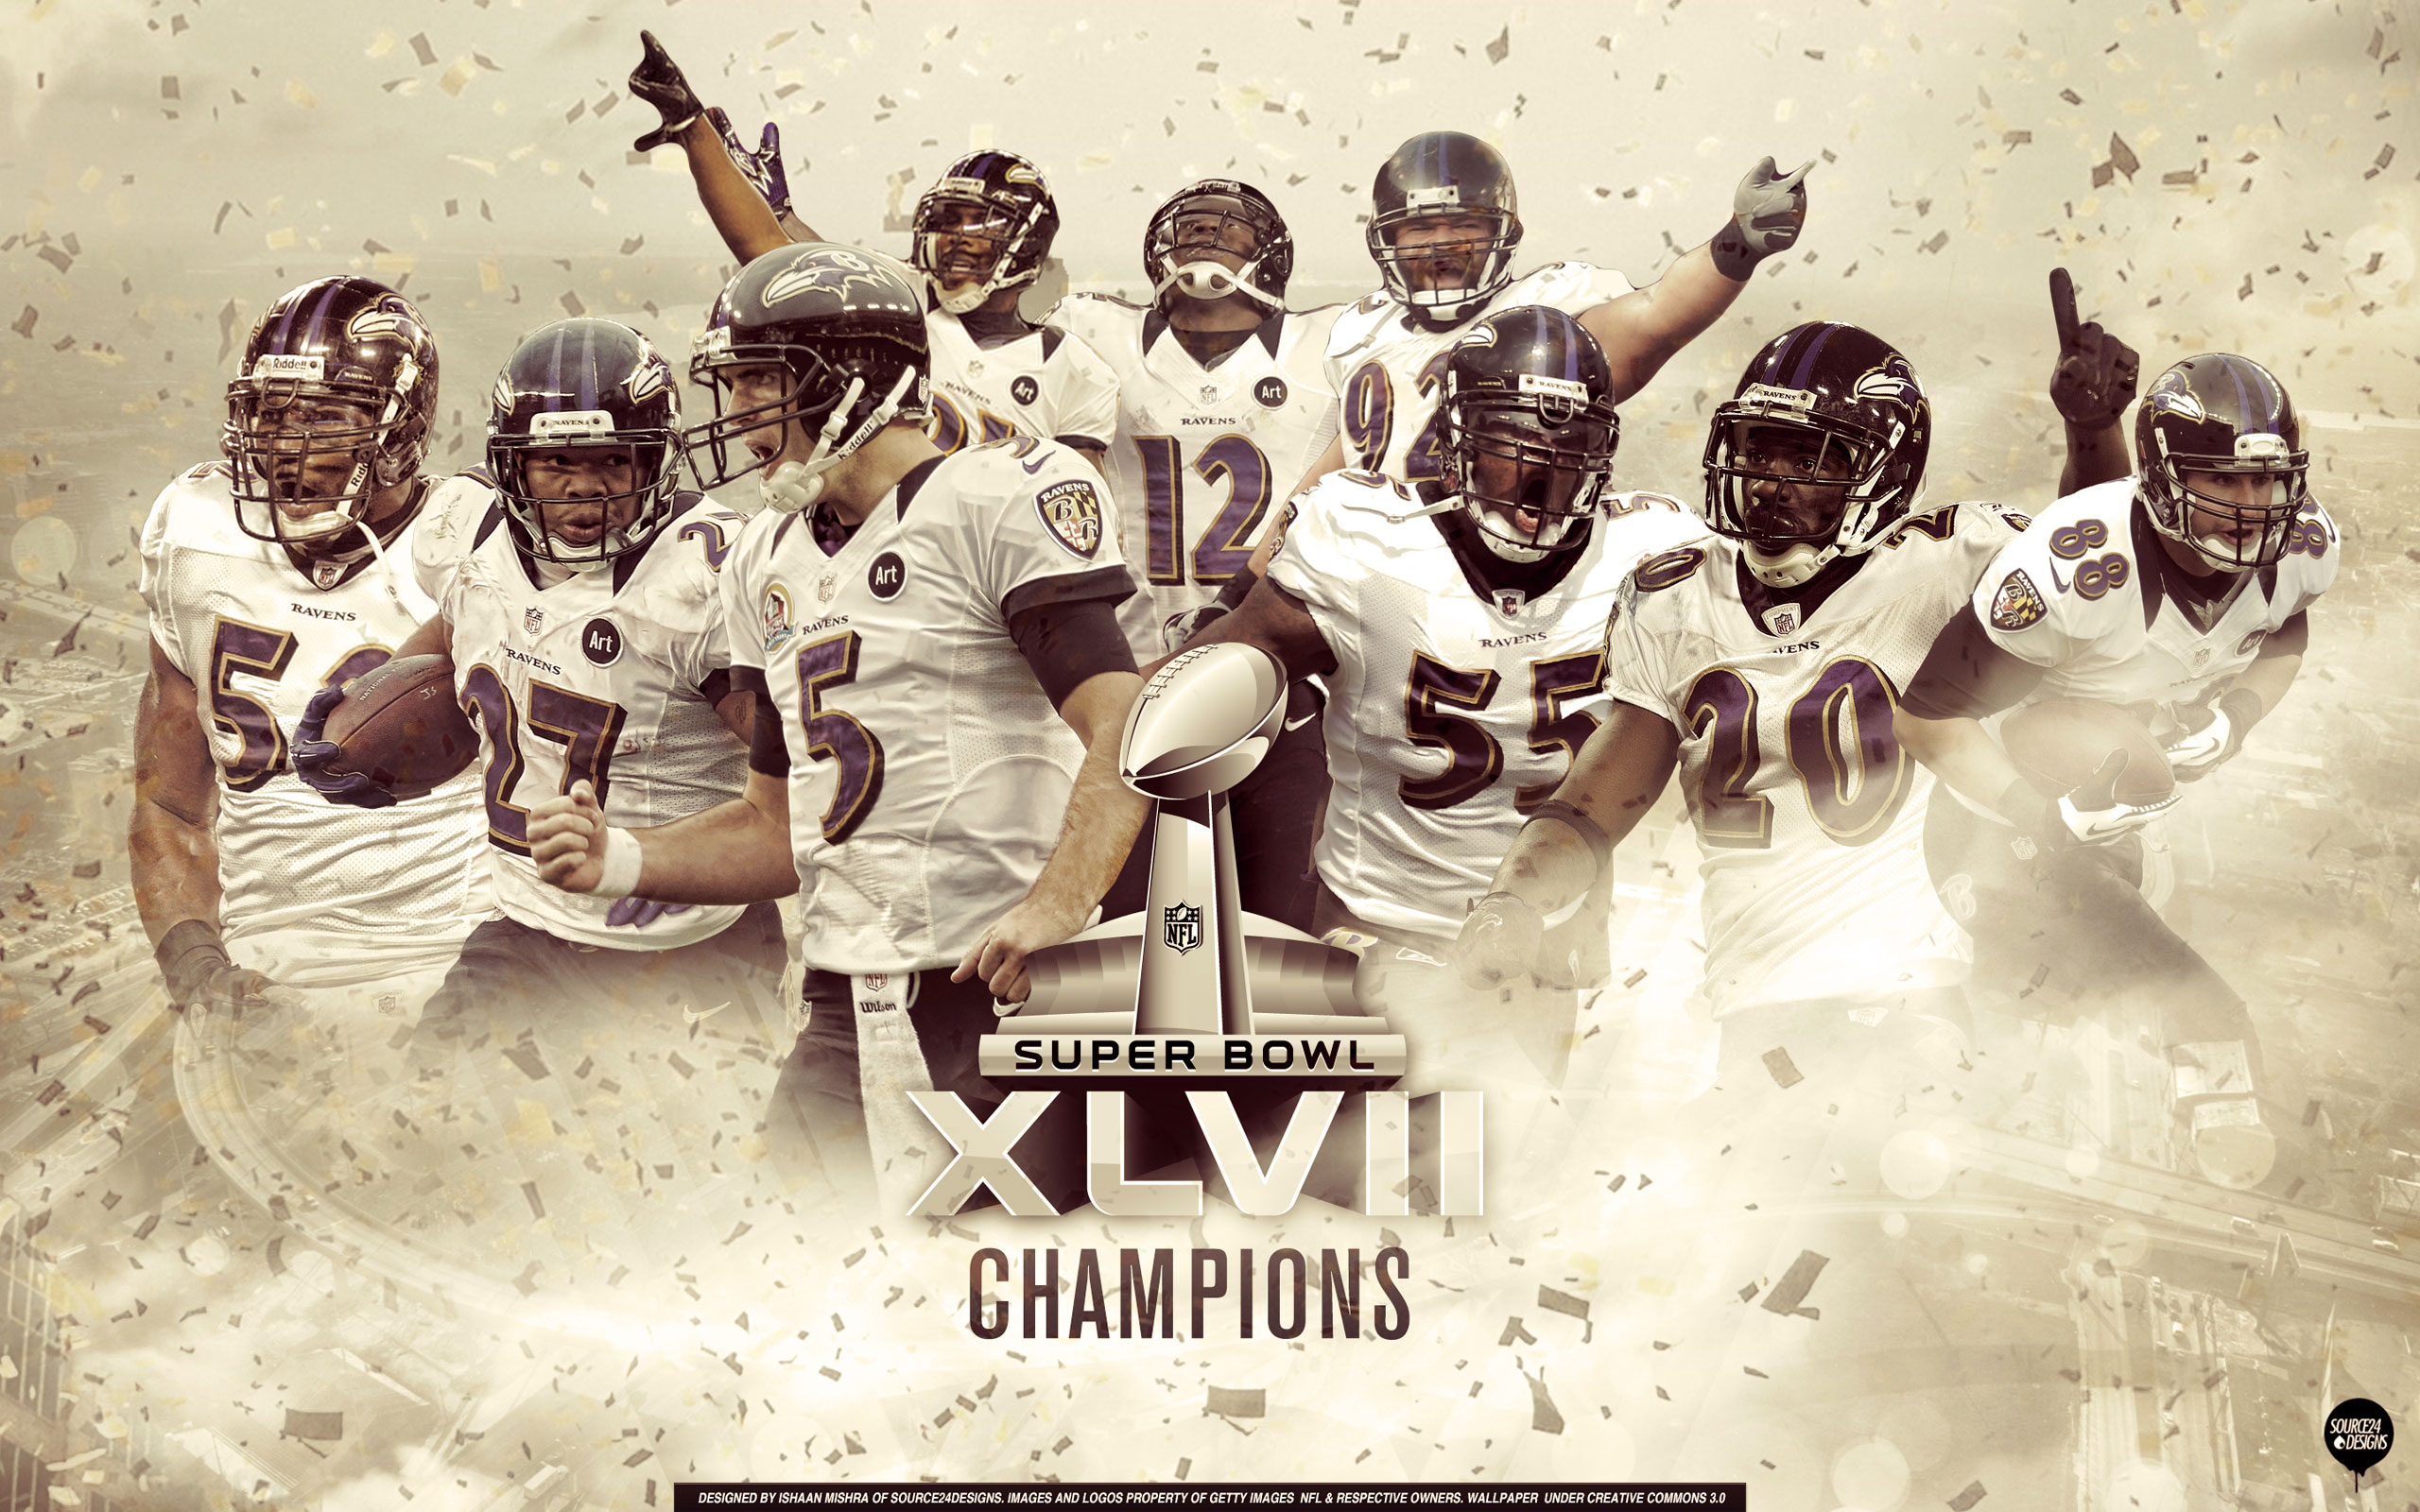  Wallpapers   Baltimore Ravens Superbowl 2013 Champions 2560x1600 2560x1600